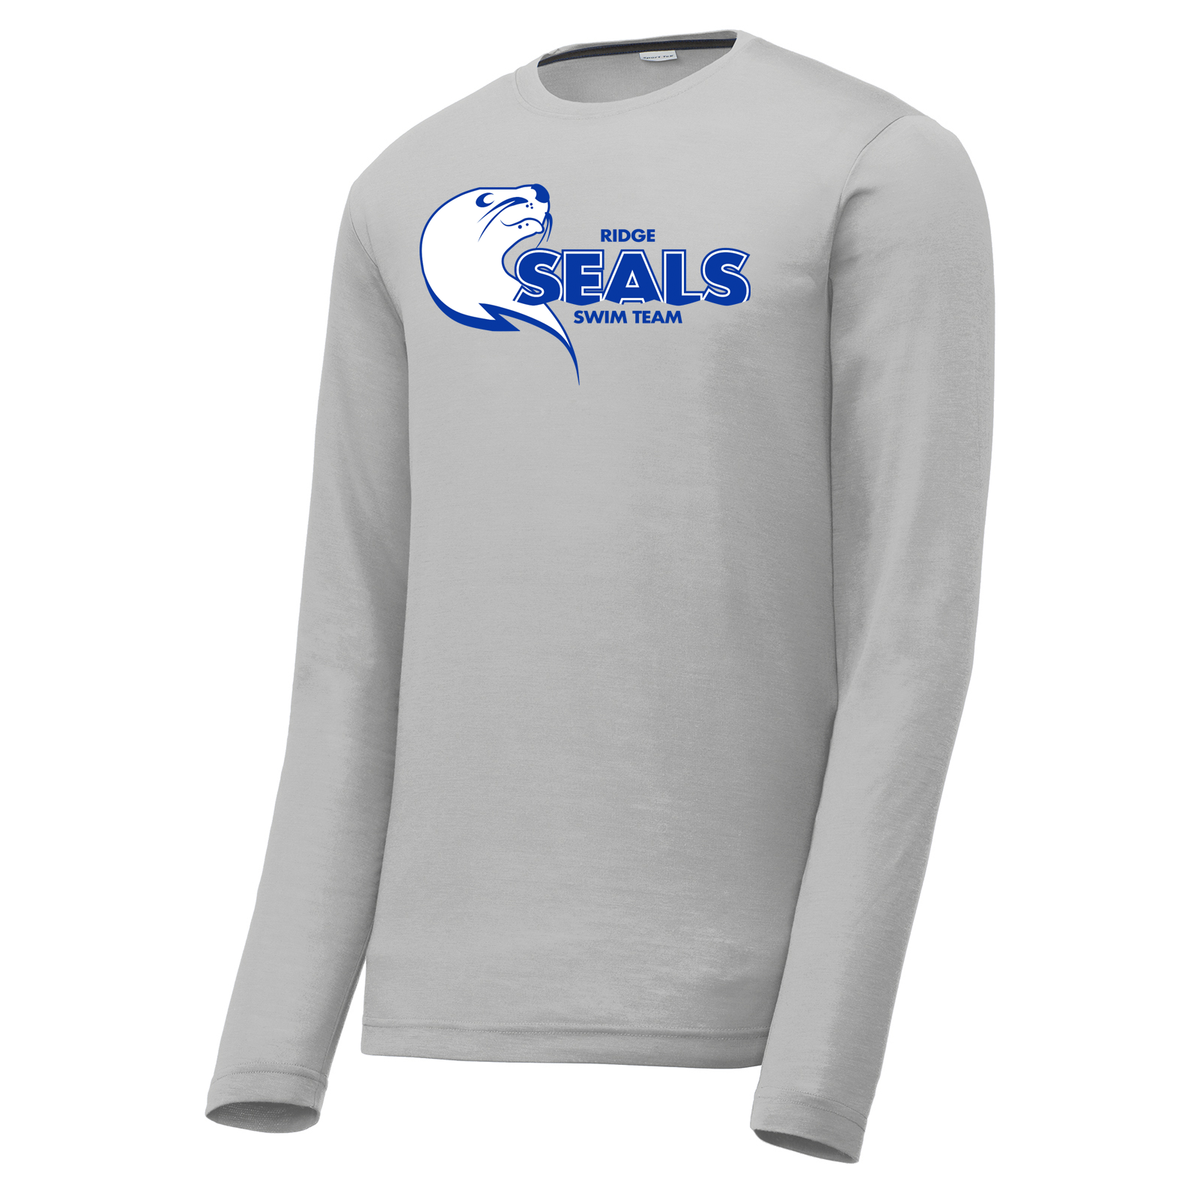 Ridge Seals Swim Team Long Sleeve CottonTouch Performance Shirt